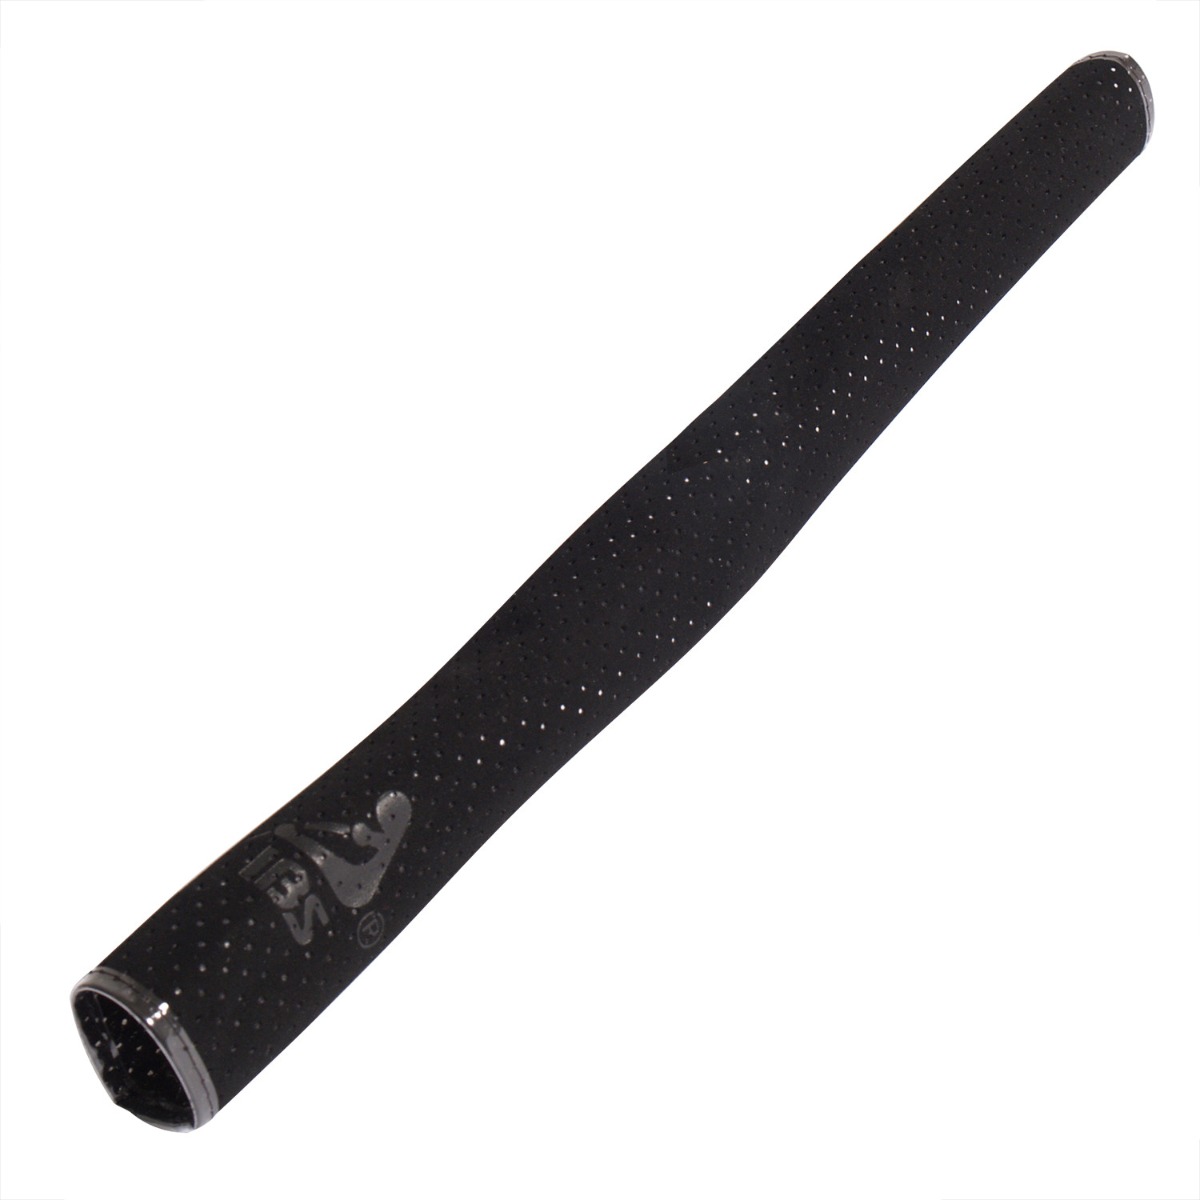 IBS Cue Grip Perforated Semi Leather Black 30cm